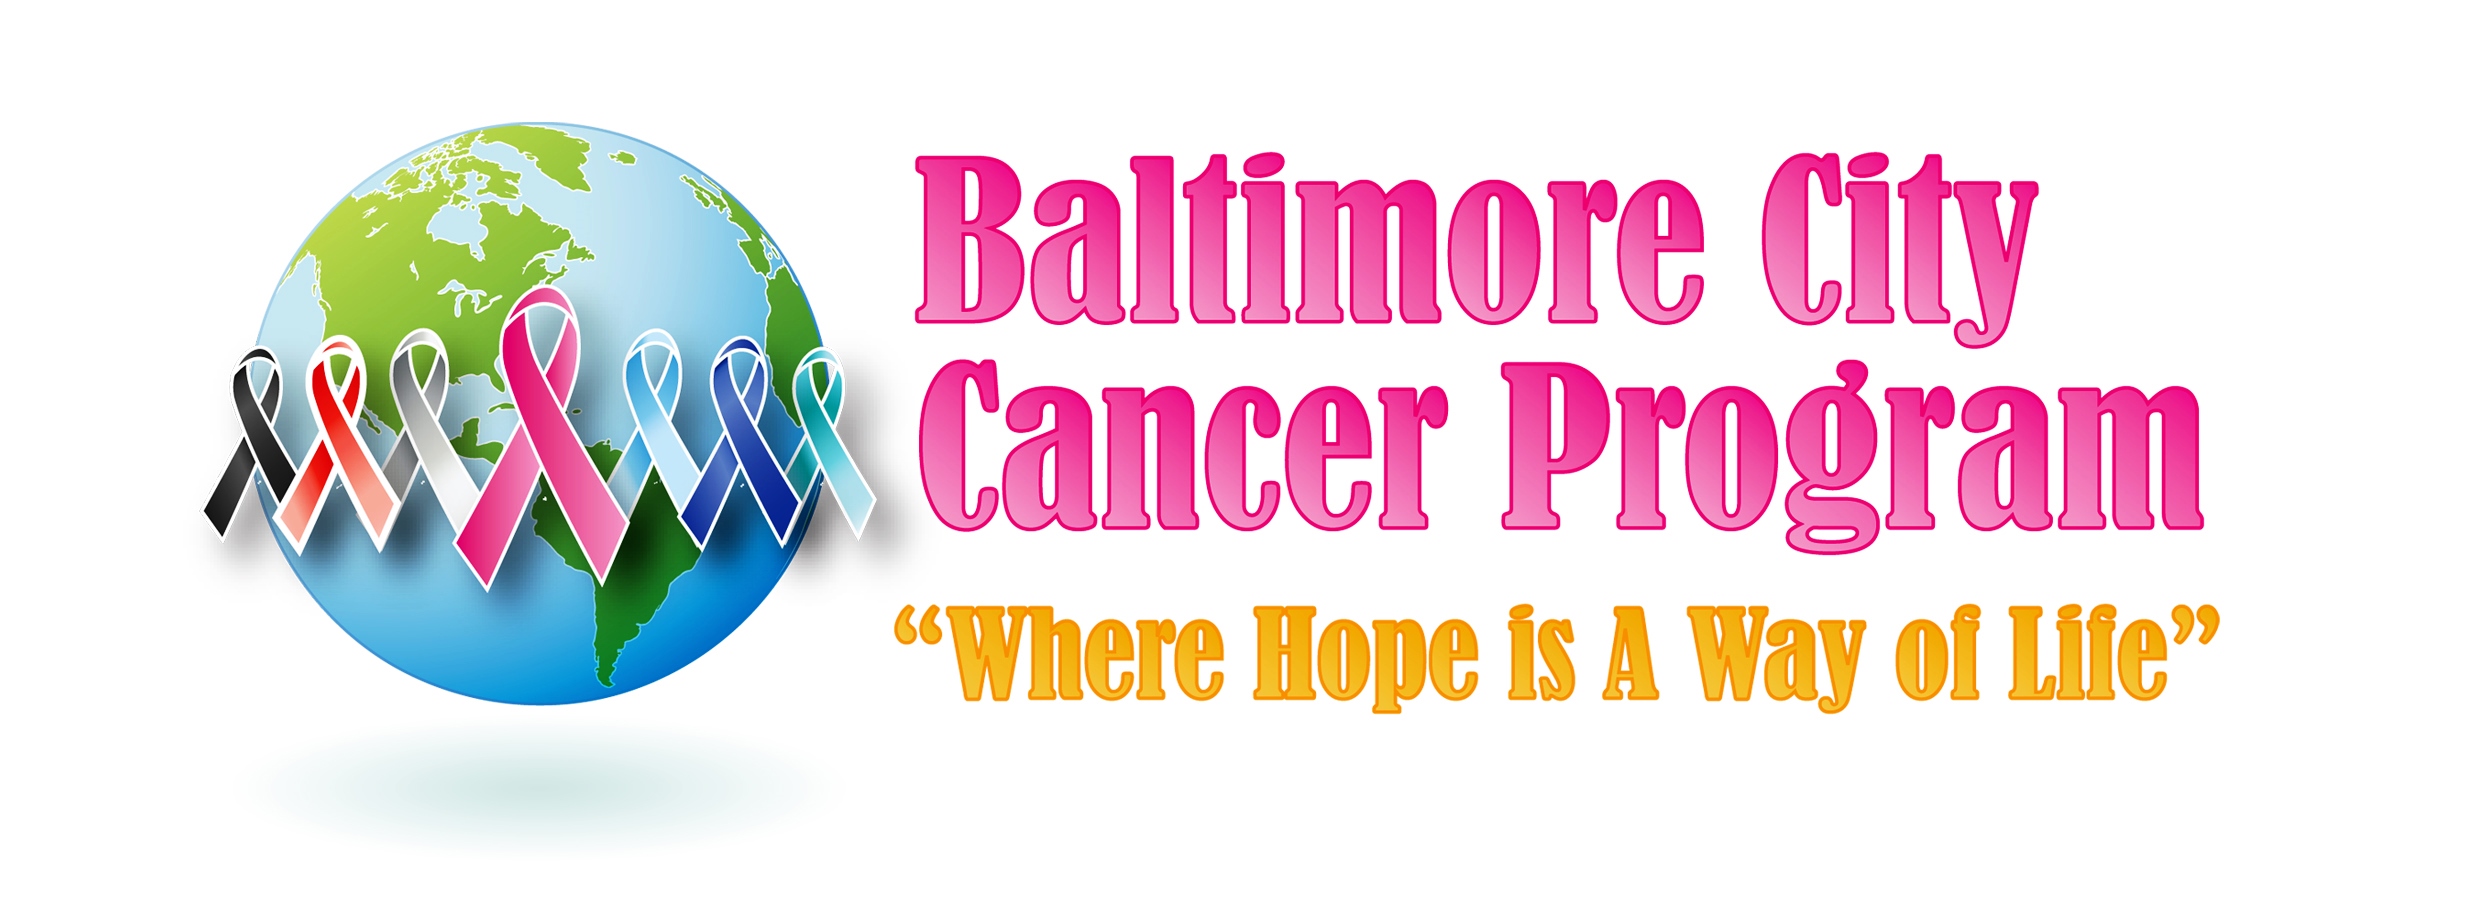 Baltimore-City-Cancer-program.jpg